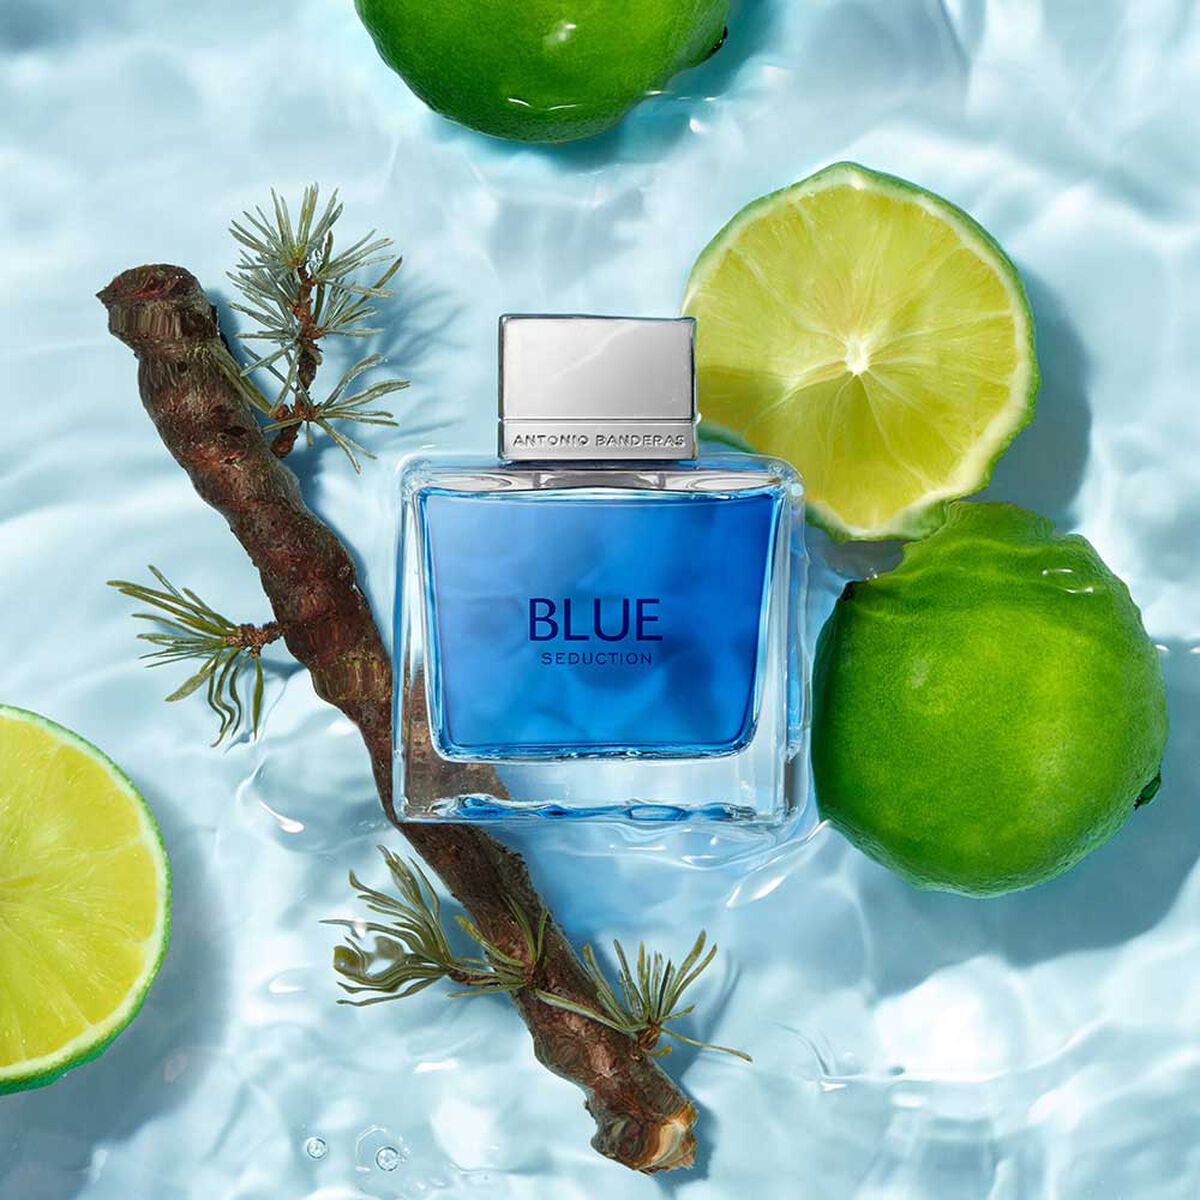 Set de Perfume Antonio Bandera Blue Seduction EDT 100 ml + DEO 150 ml